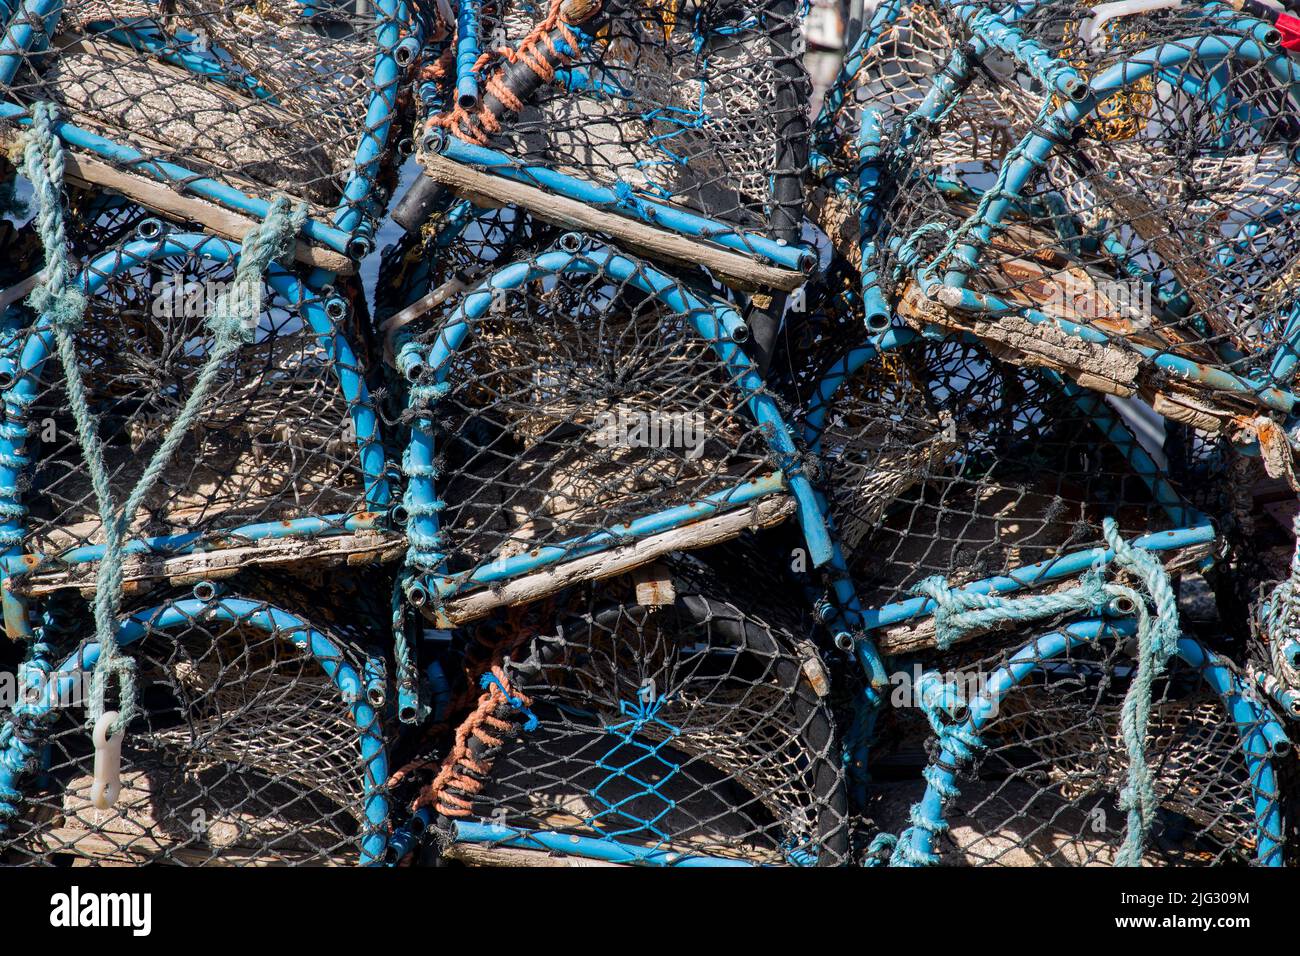 Lobster pots closeup view at a coastal harbour location Stock Photo